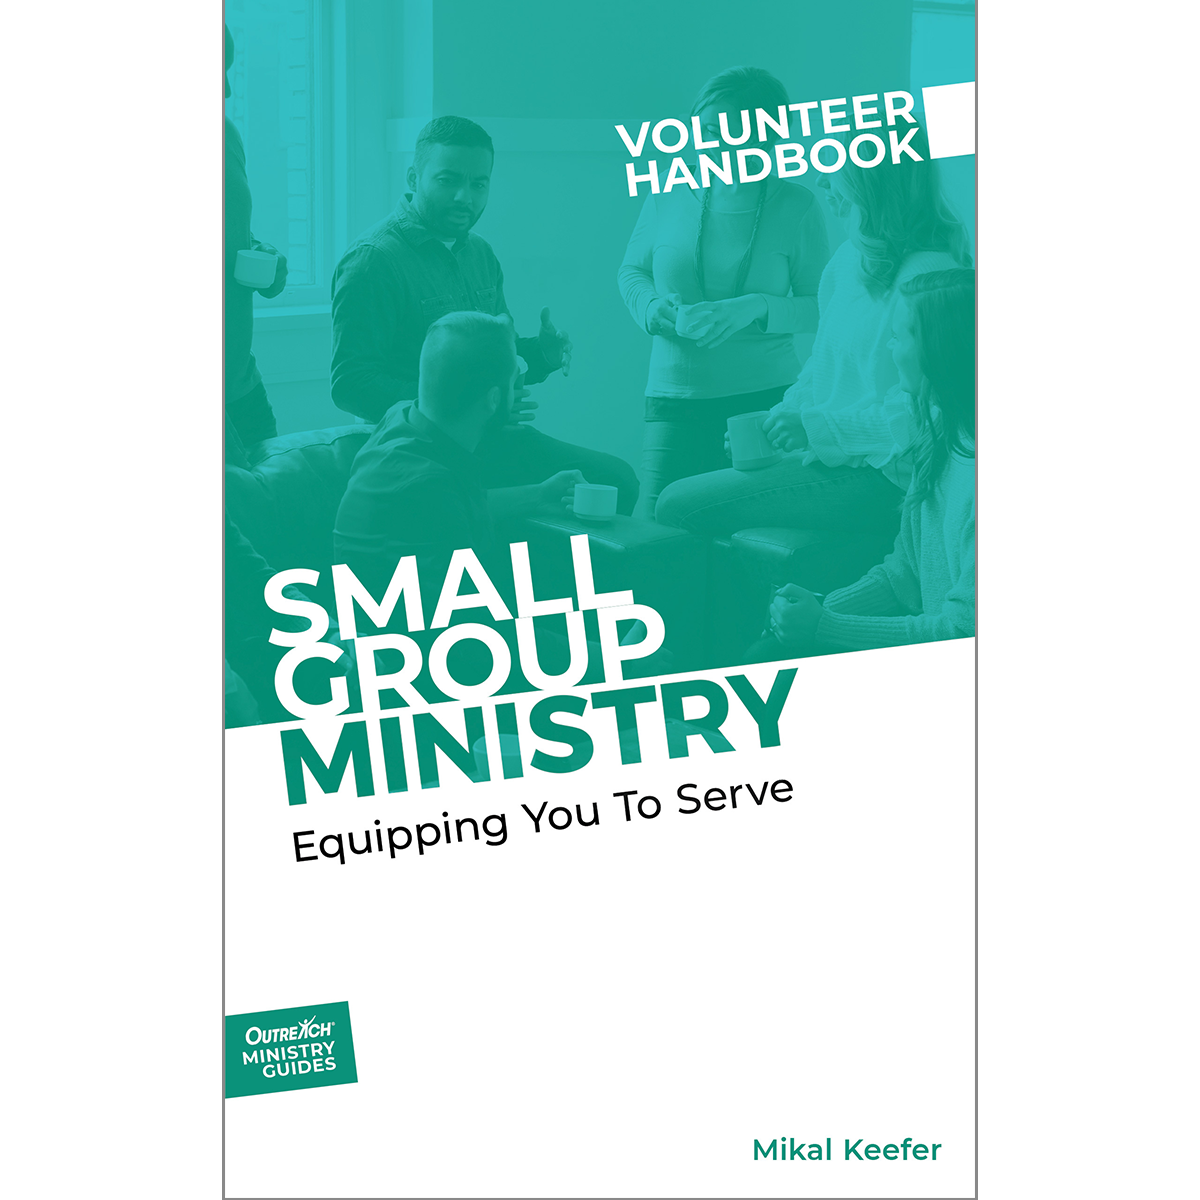 Small Group Ministry Volunteer Handbook